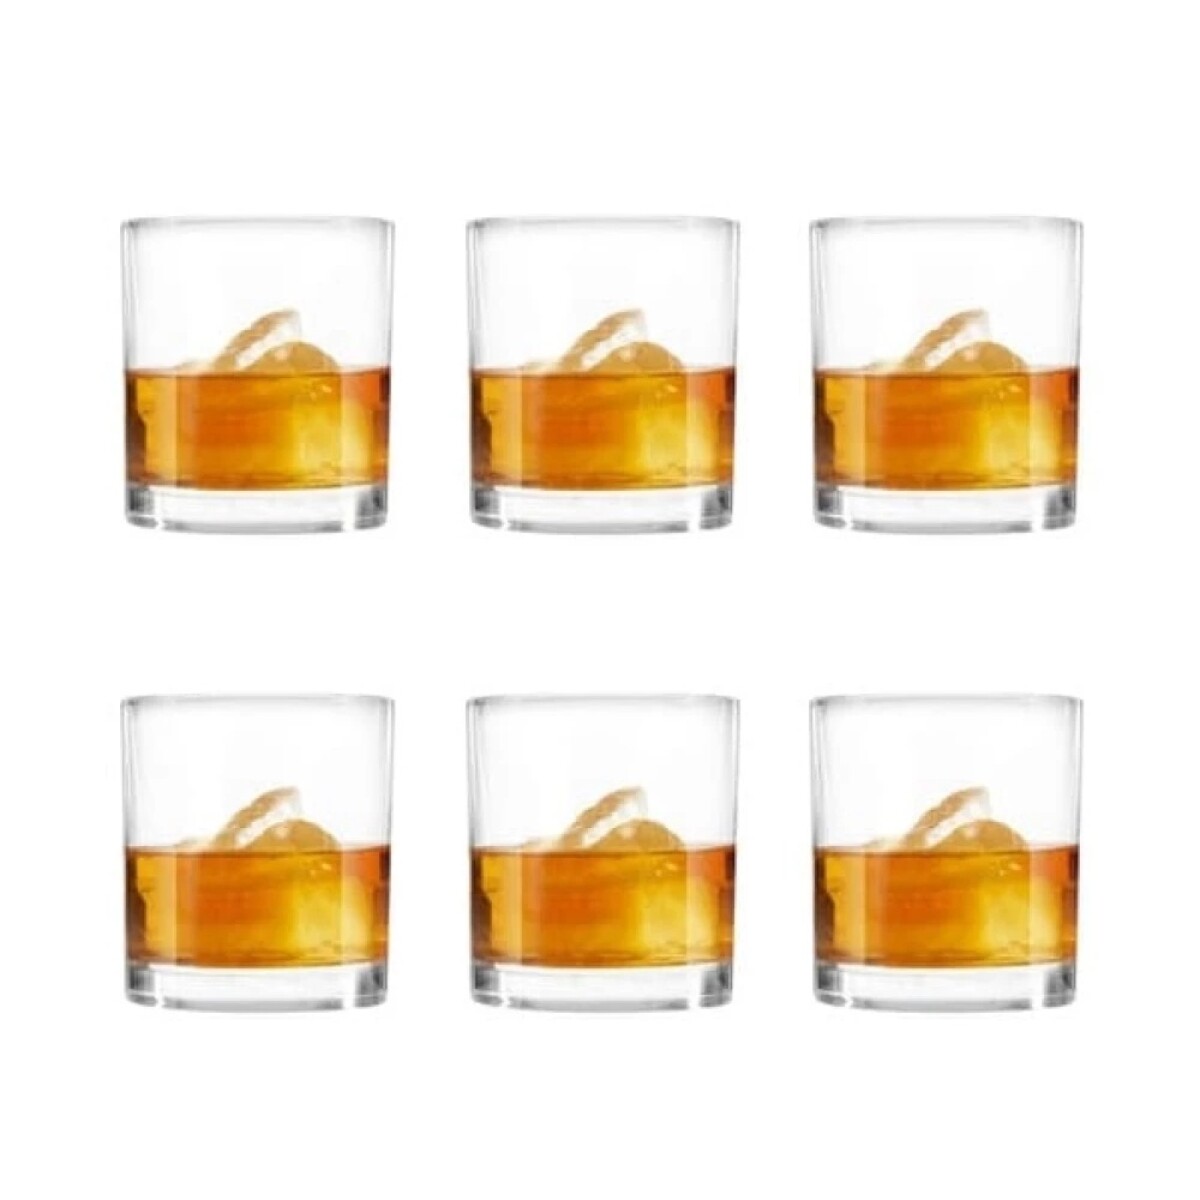 Set de 6 Vasos para Whisky en Vidrio de 325ml Barley - Transparente 